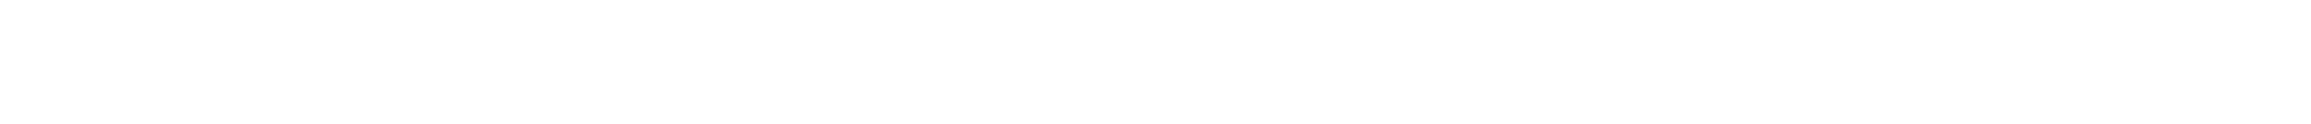 The world university rankings